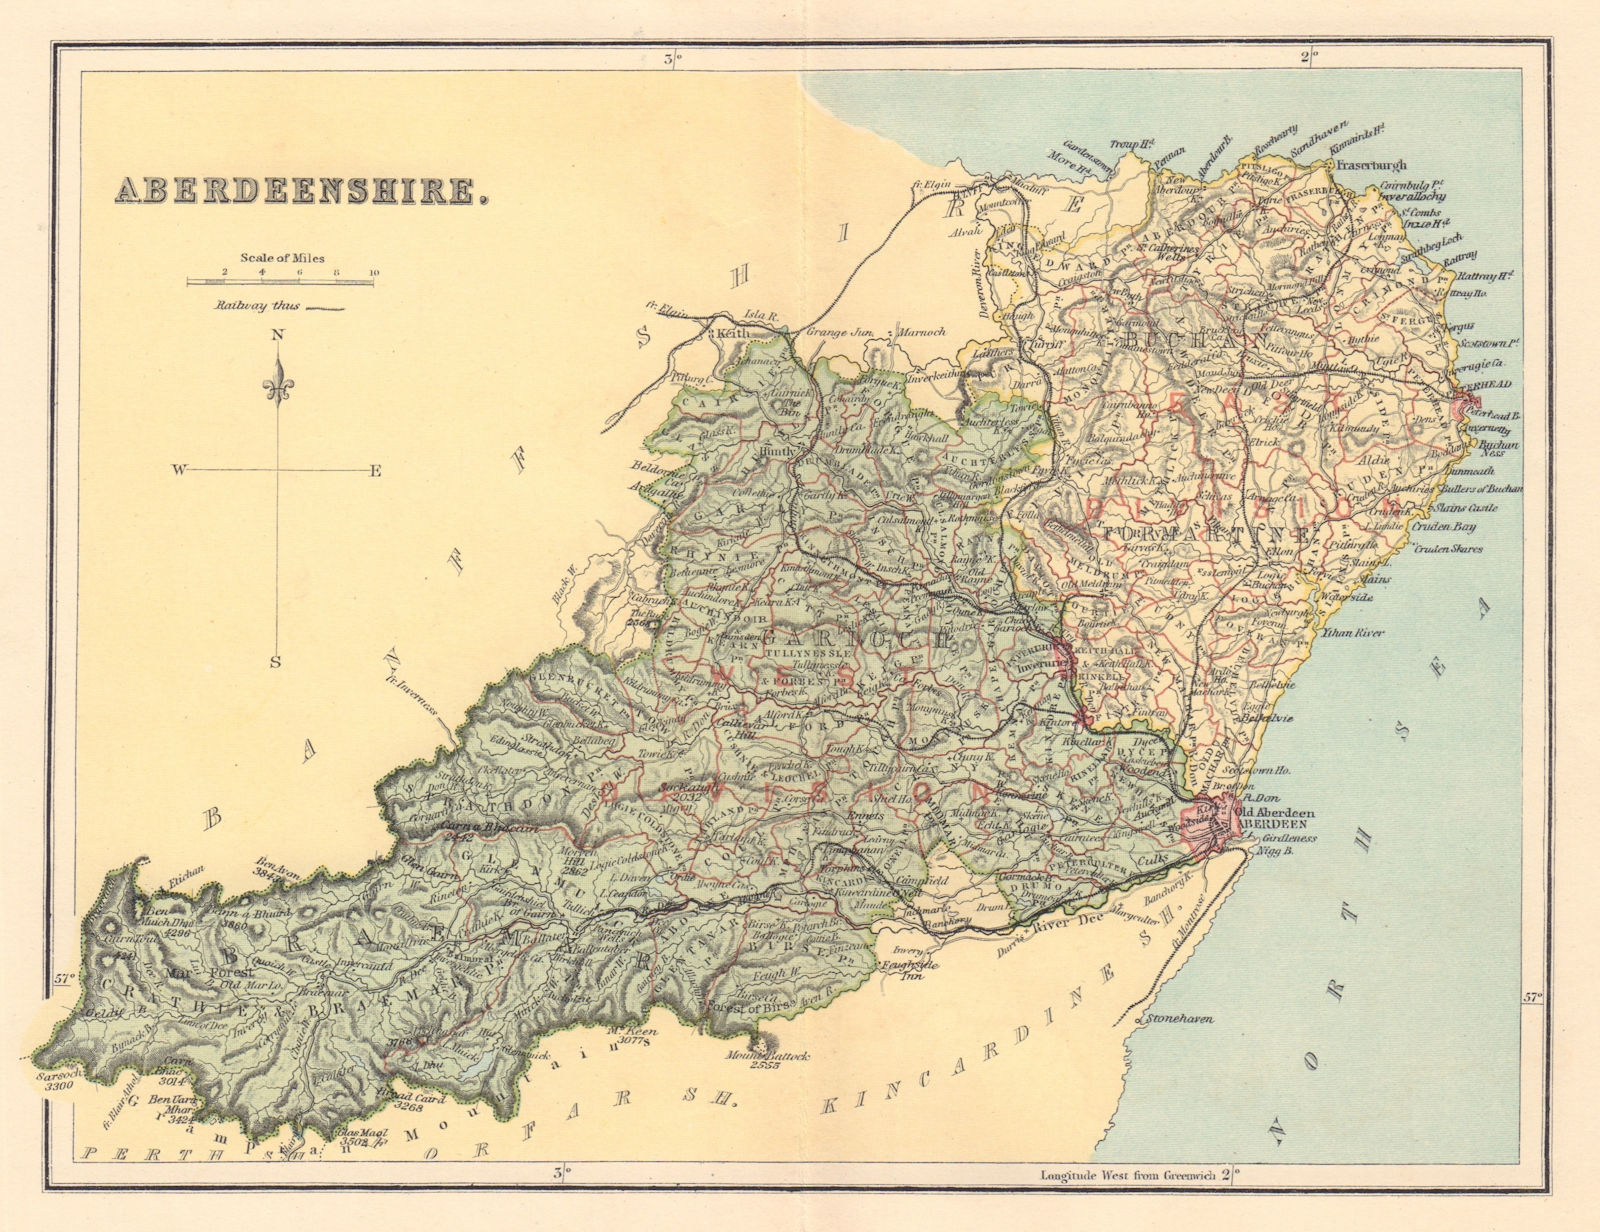 ABERDEENSHIRE antique county map with parishes. Aberdeen. Scotland. LIZARS 1895